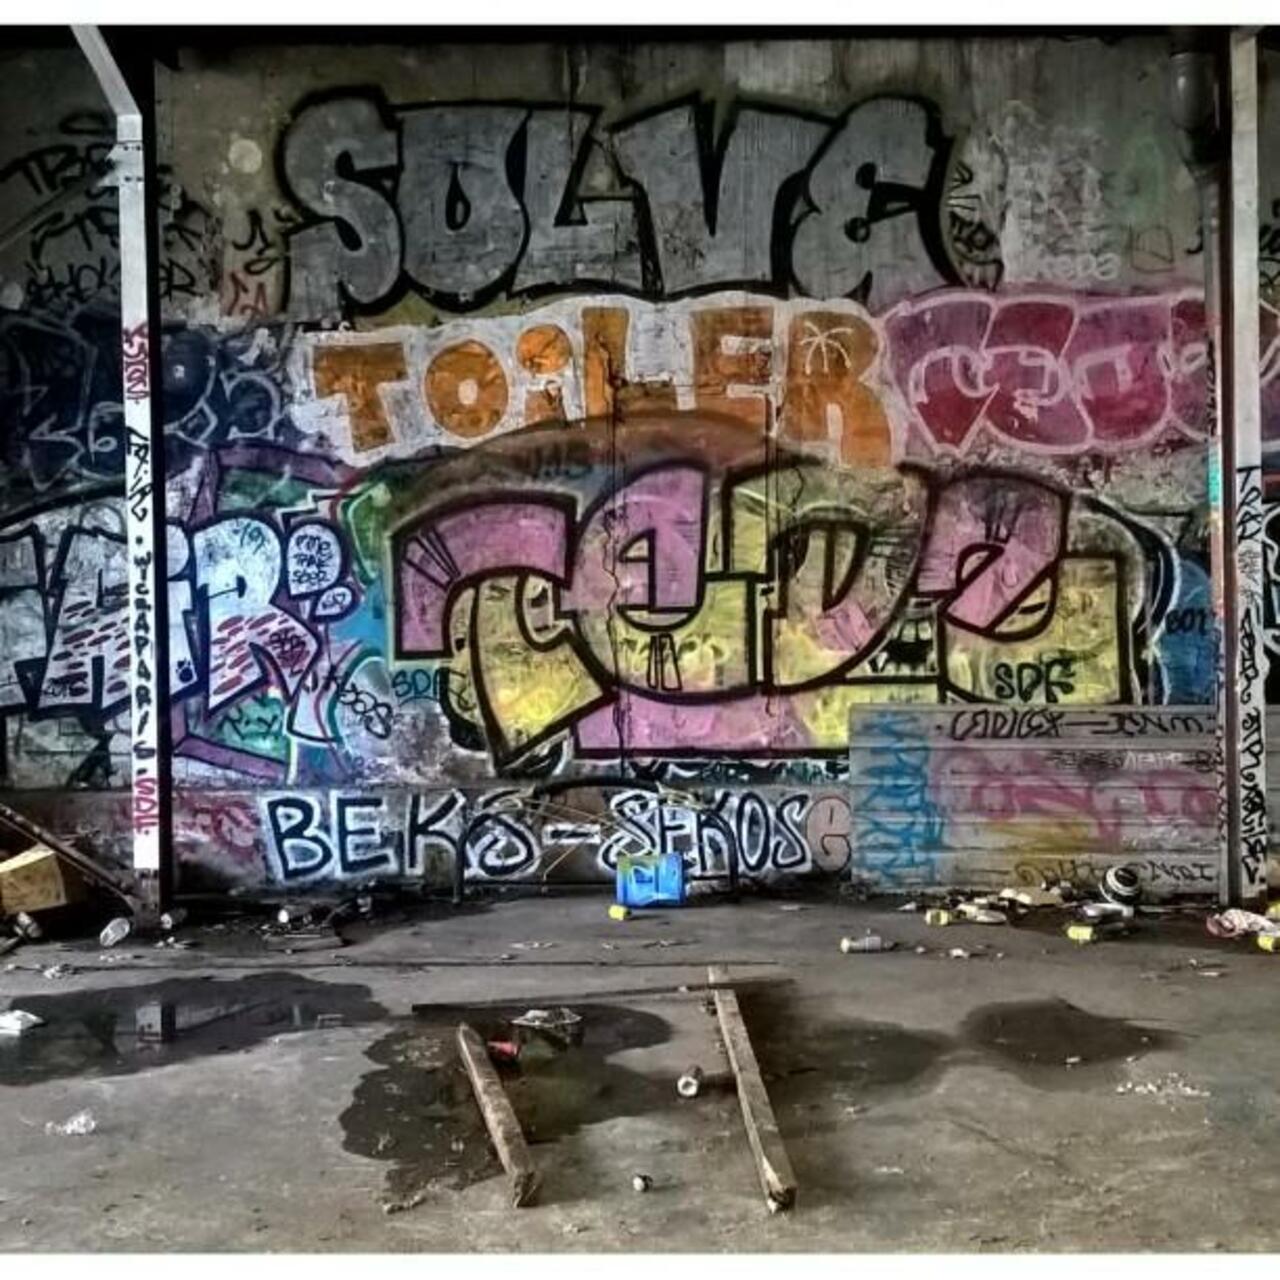 RT @StArtEverywhere: #streetart #graffiti #graff #art #fatcap #bombing #sprayart #spraycanart #wallart #handstyle #lettering #urbanart #… http://t.co/IrA6FIFcfu